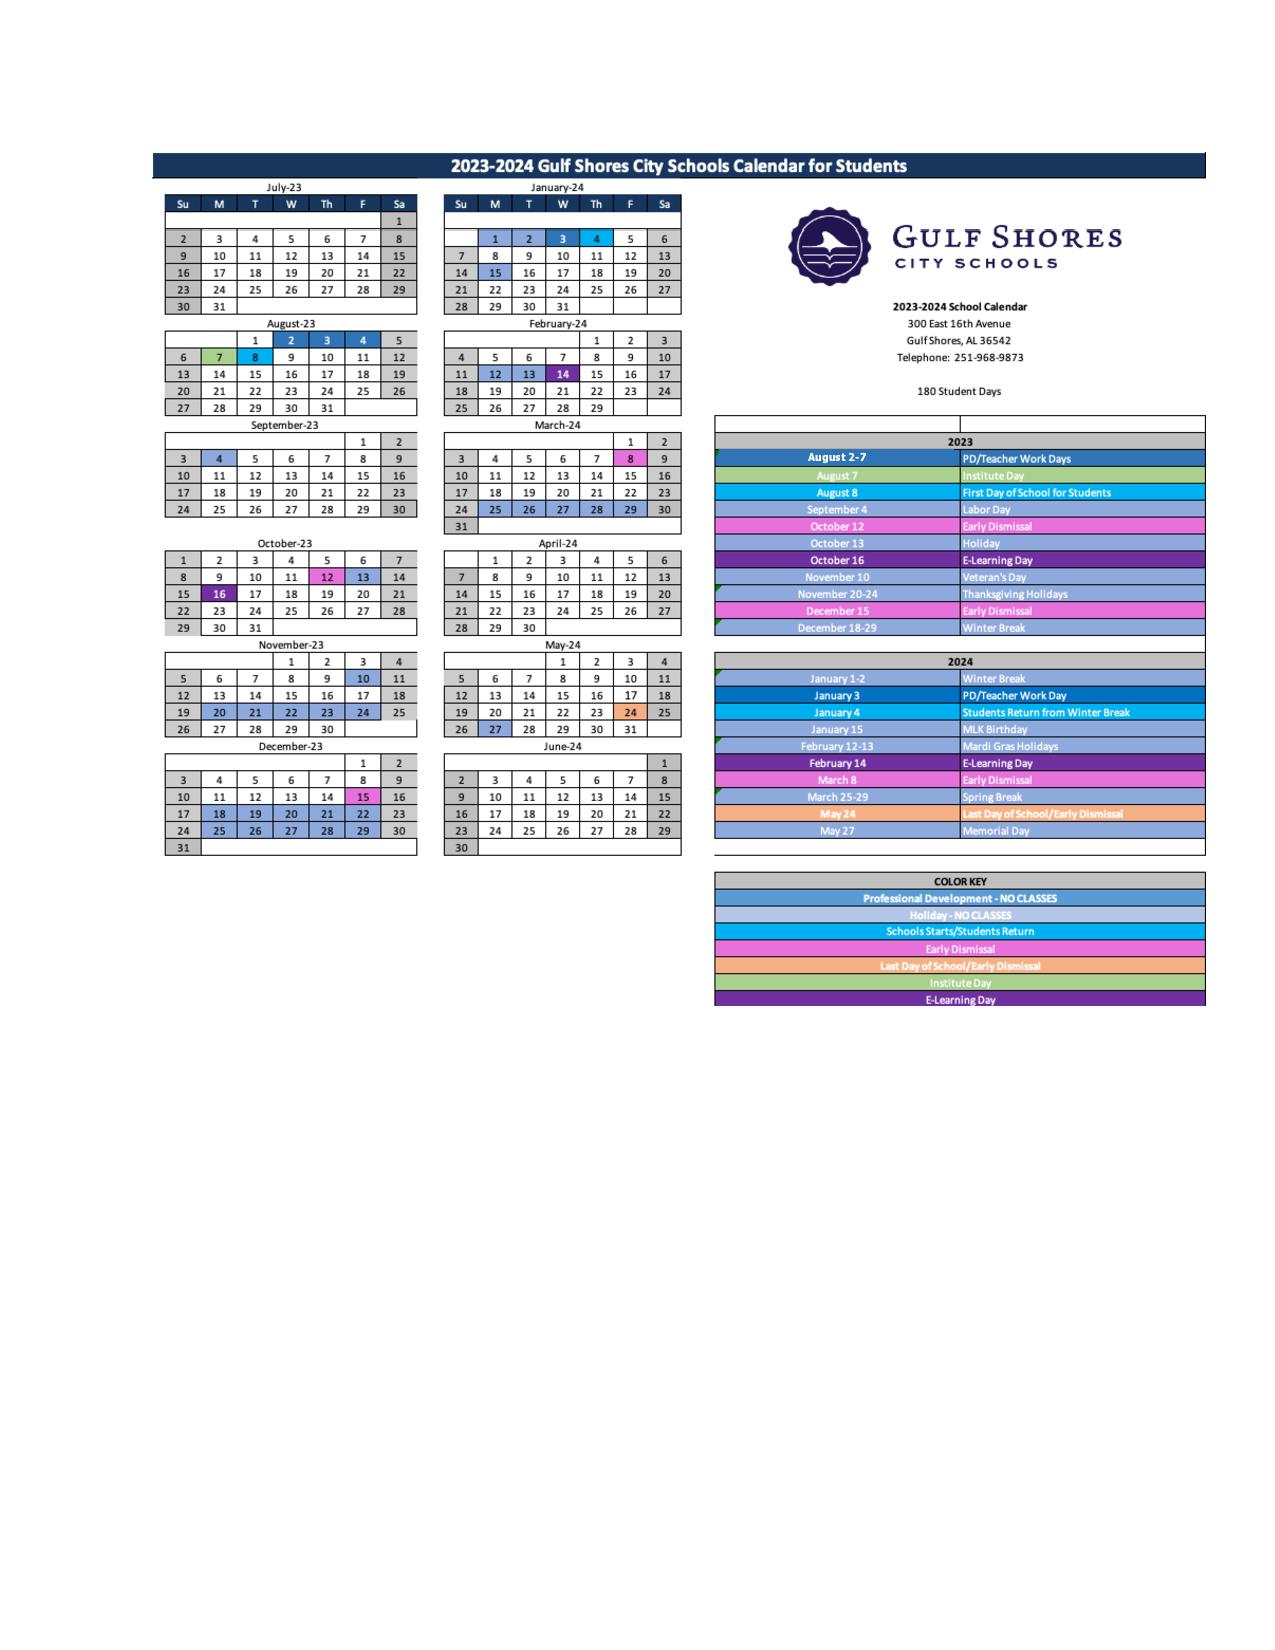 Gulf Shores City Schools Calendar 20232024 in PDF